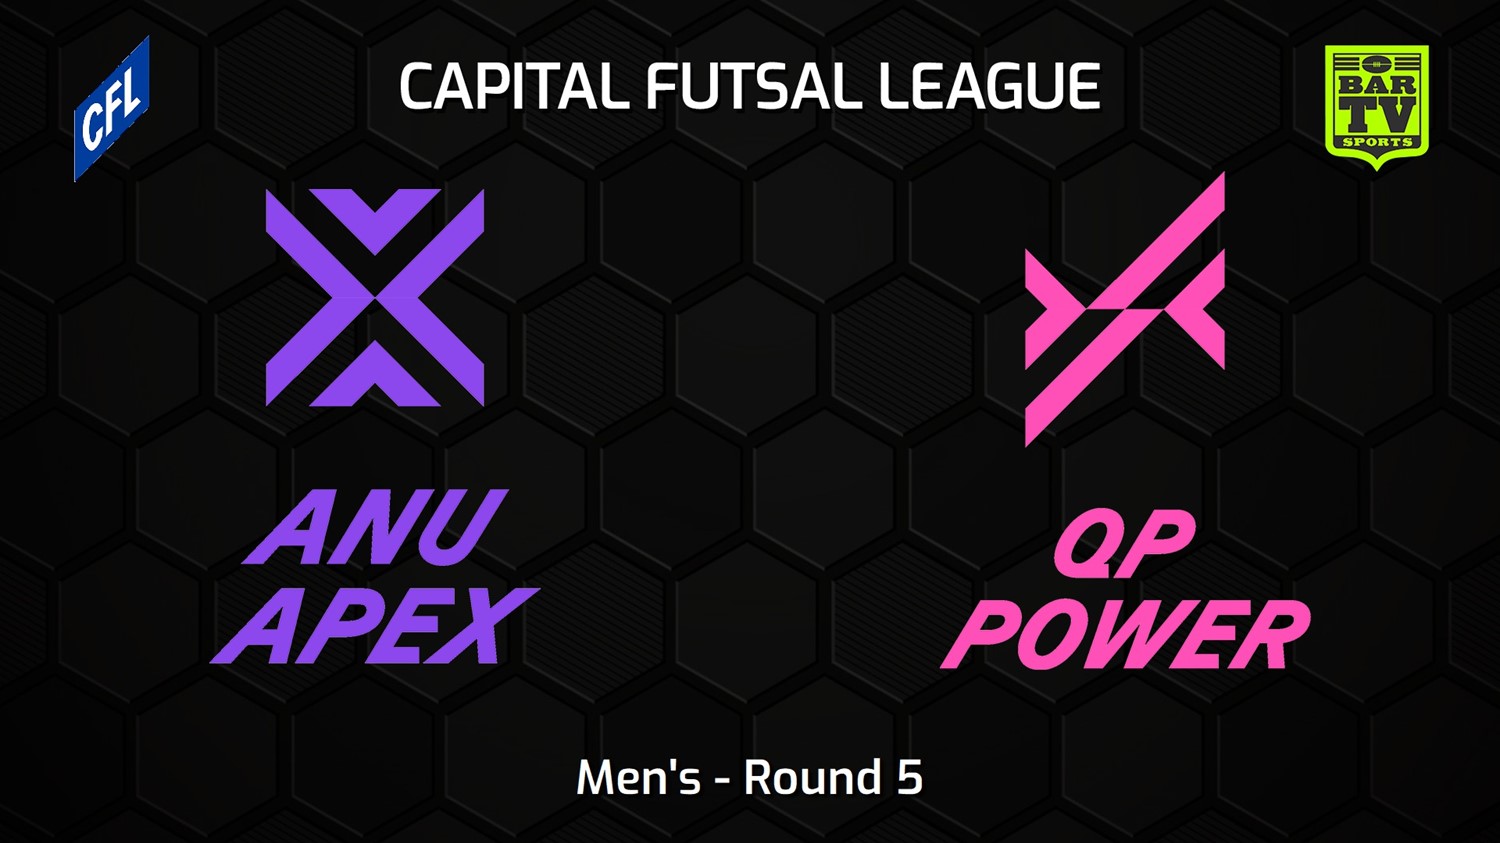 230121-Capital Football Futsal Round 5 - Men's - ANU Apex v Queanbeyan-Palerang Power Minigame Slate Image